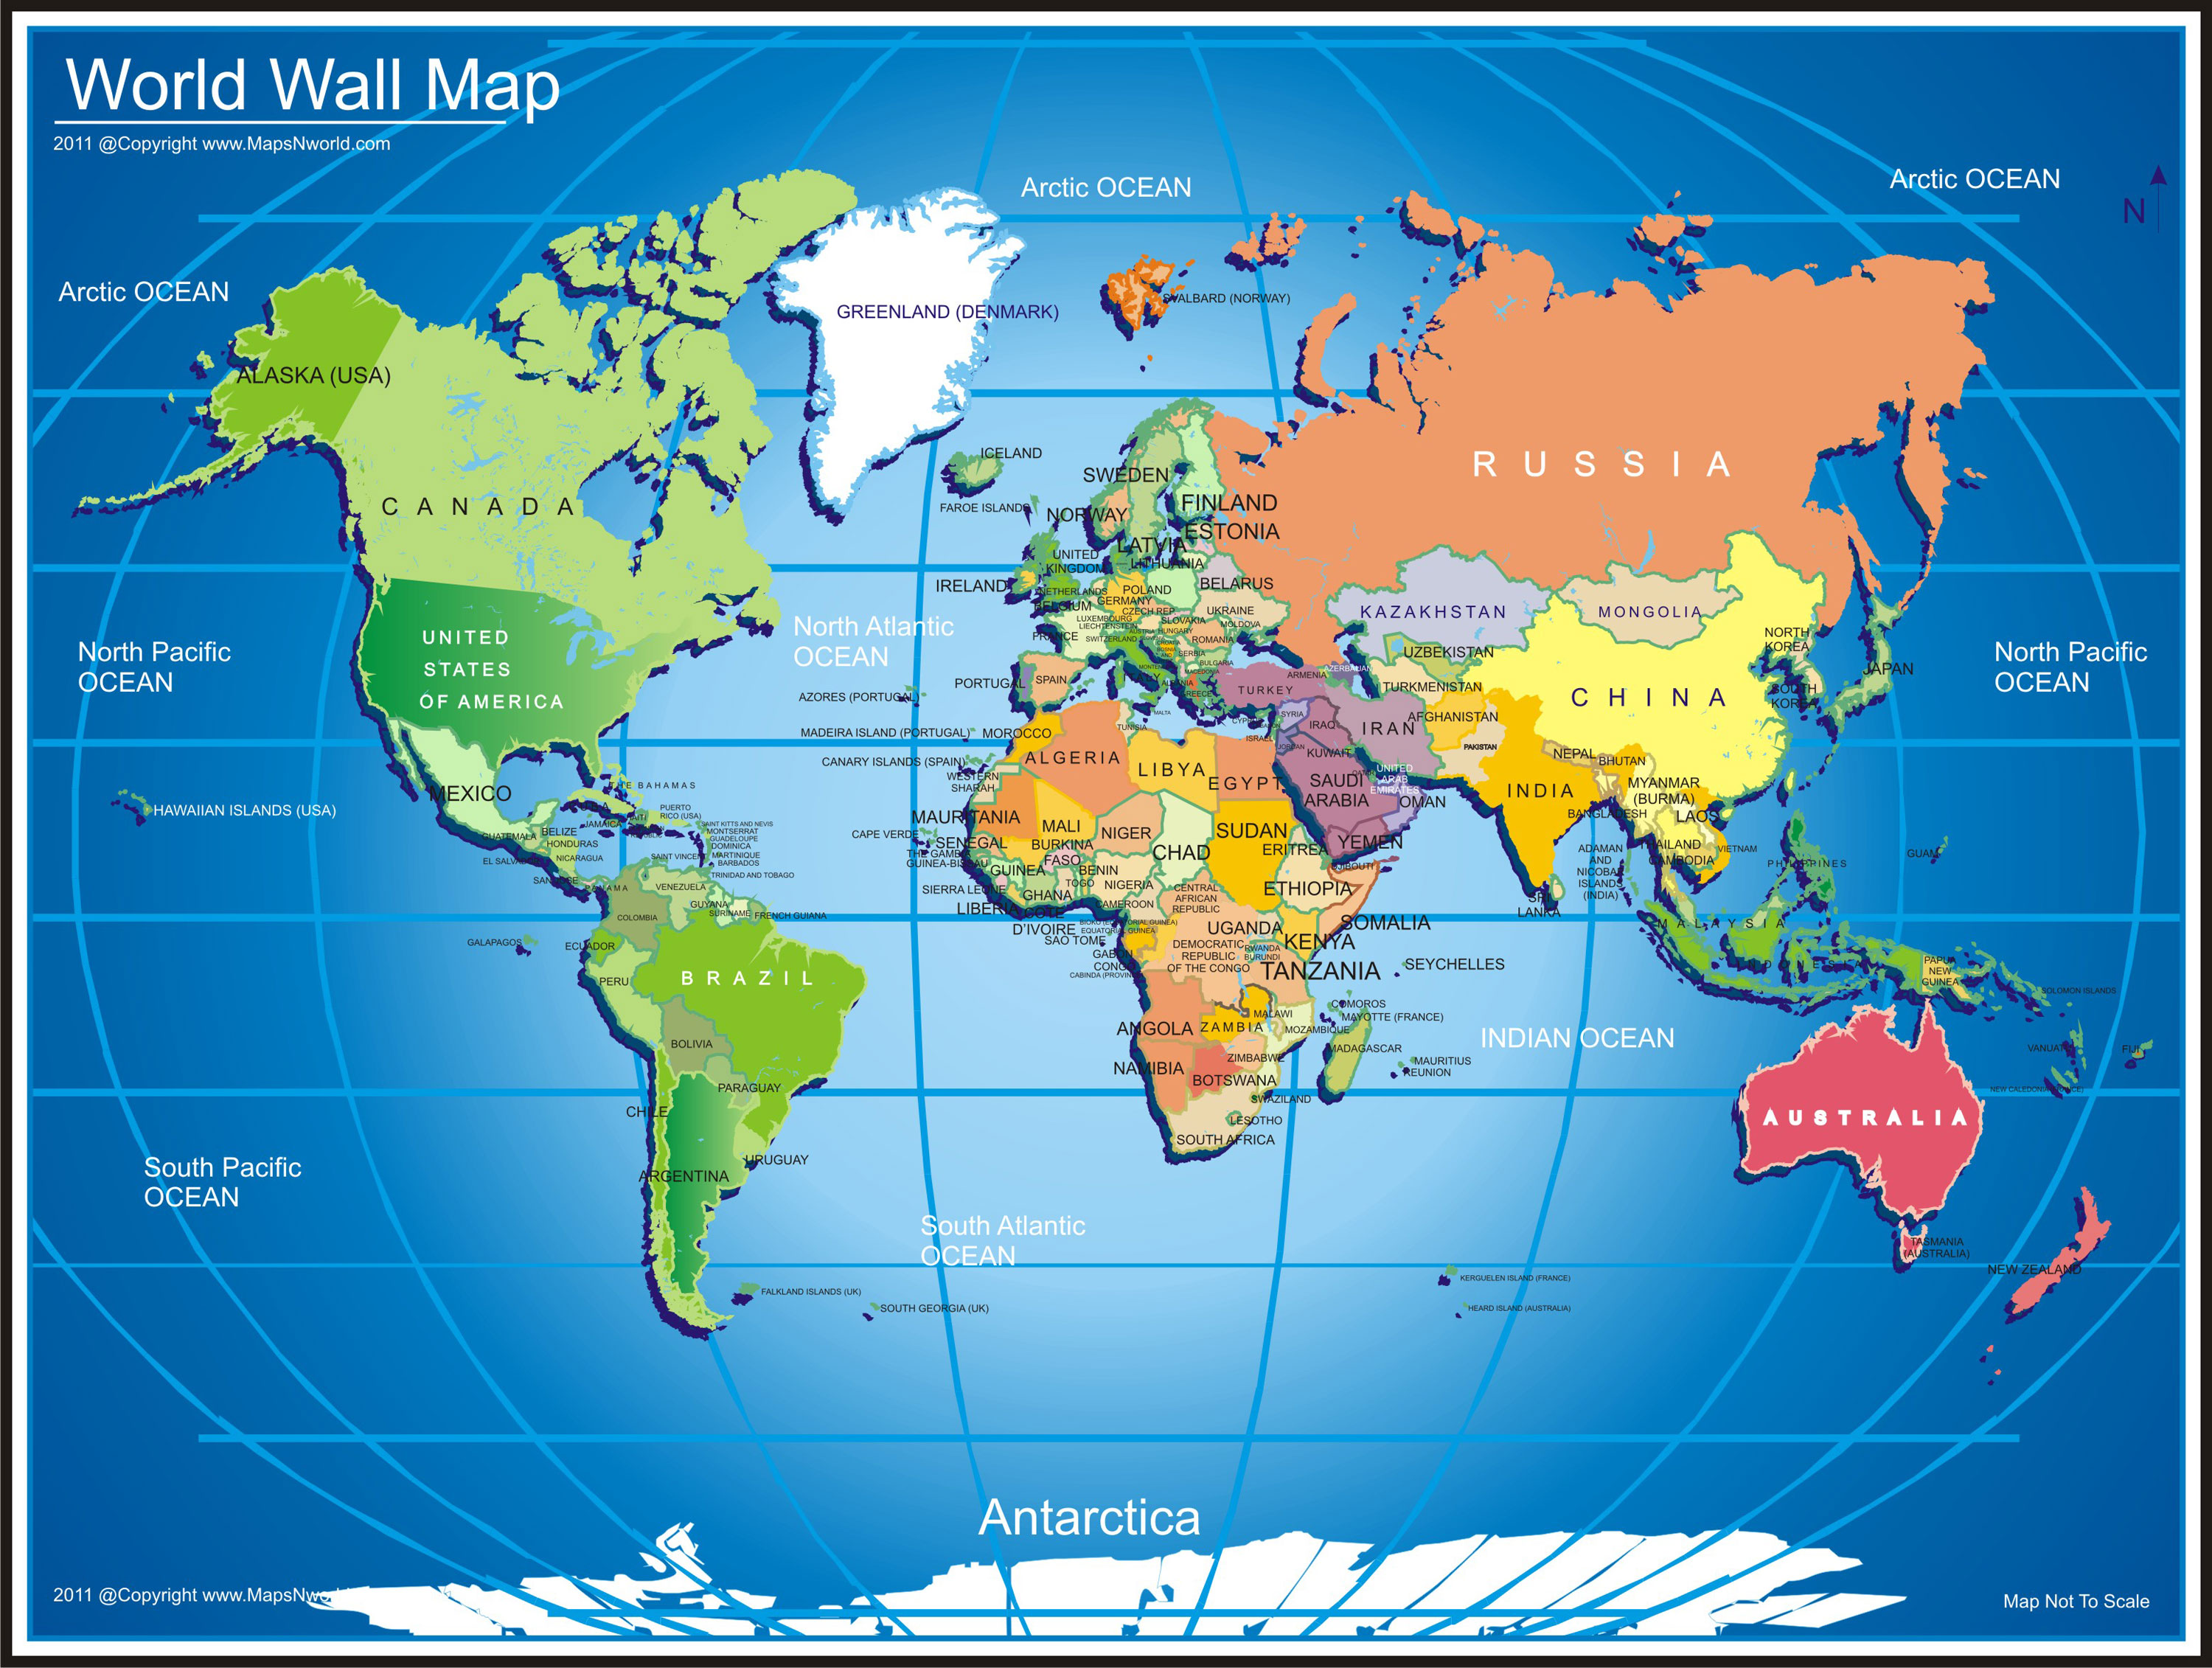 India Map Wallpaper Download